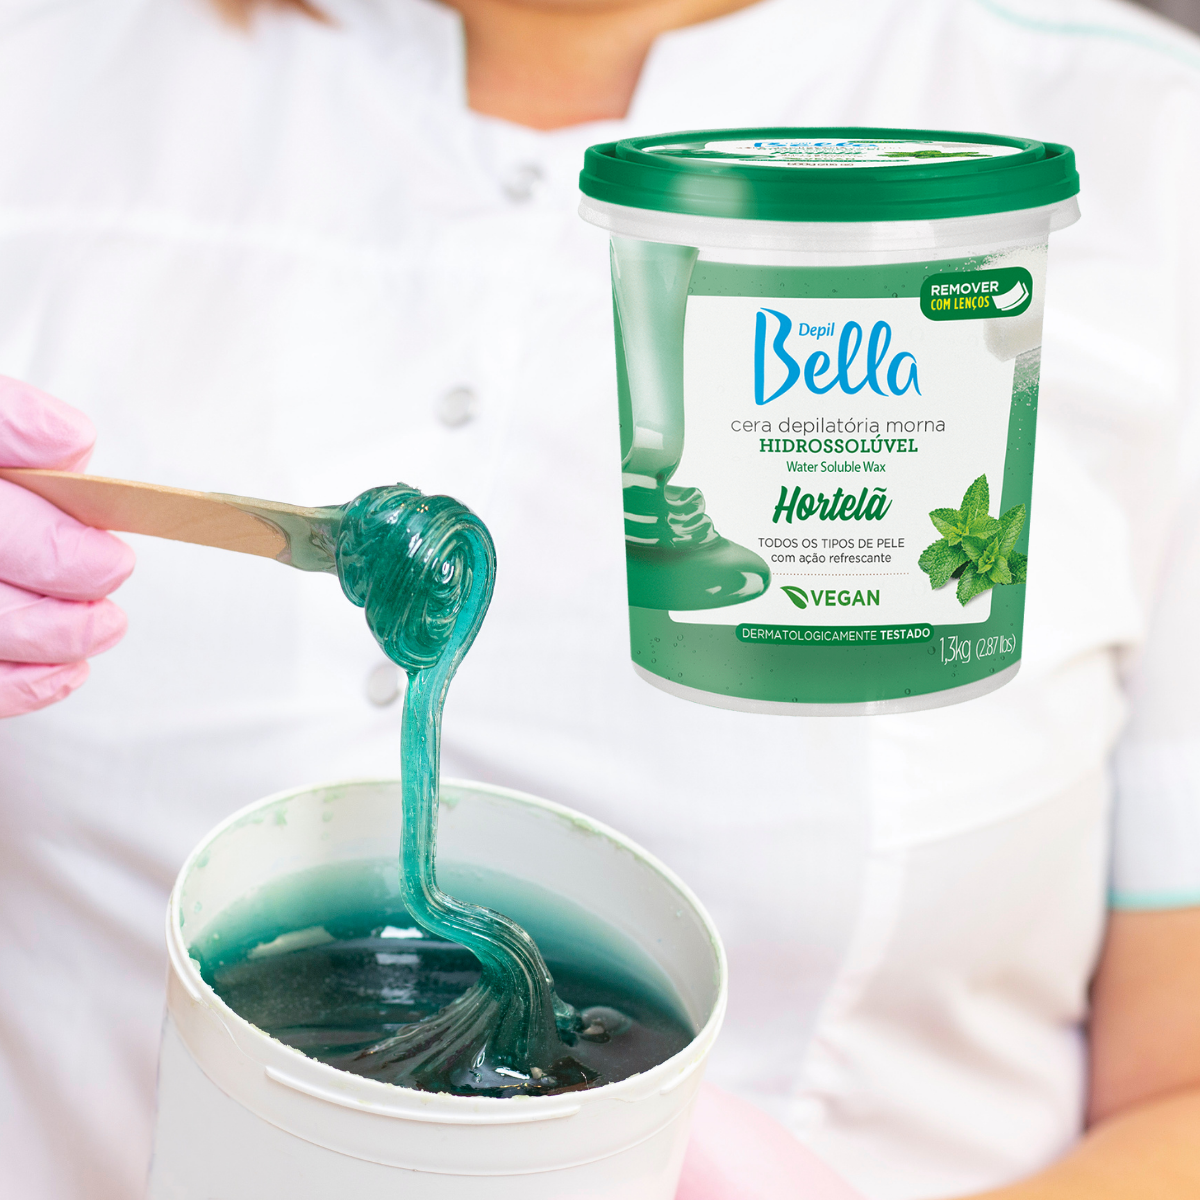 Depil Bella Full Body Sugar Wax Mint, Hair Remover 1300g - depilcompany